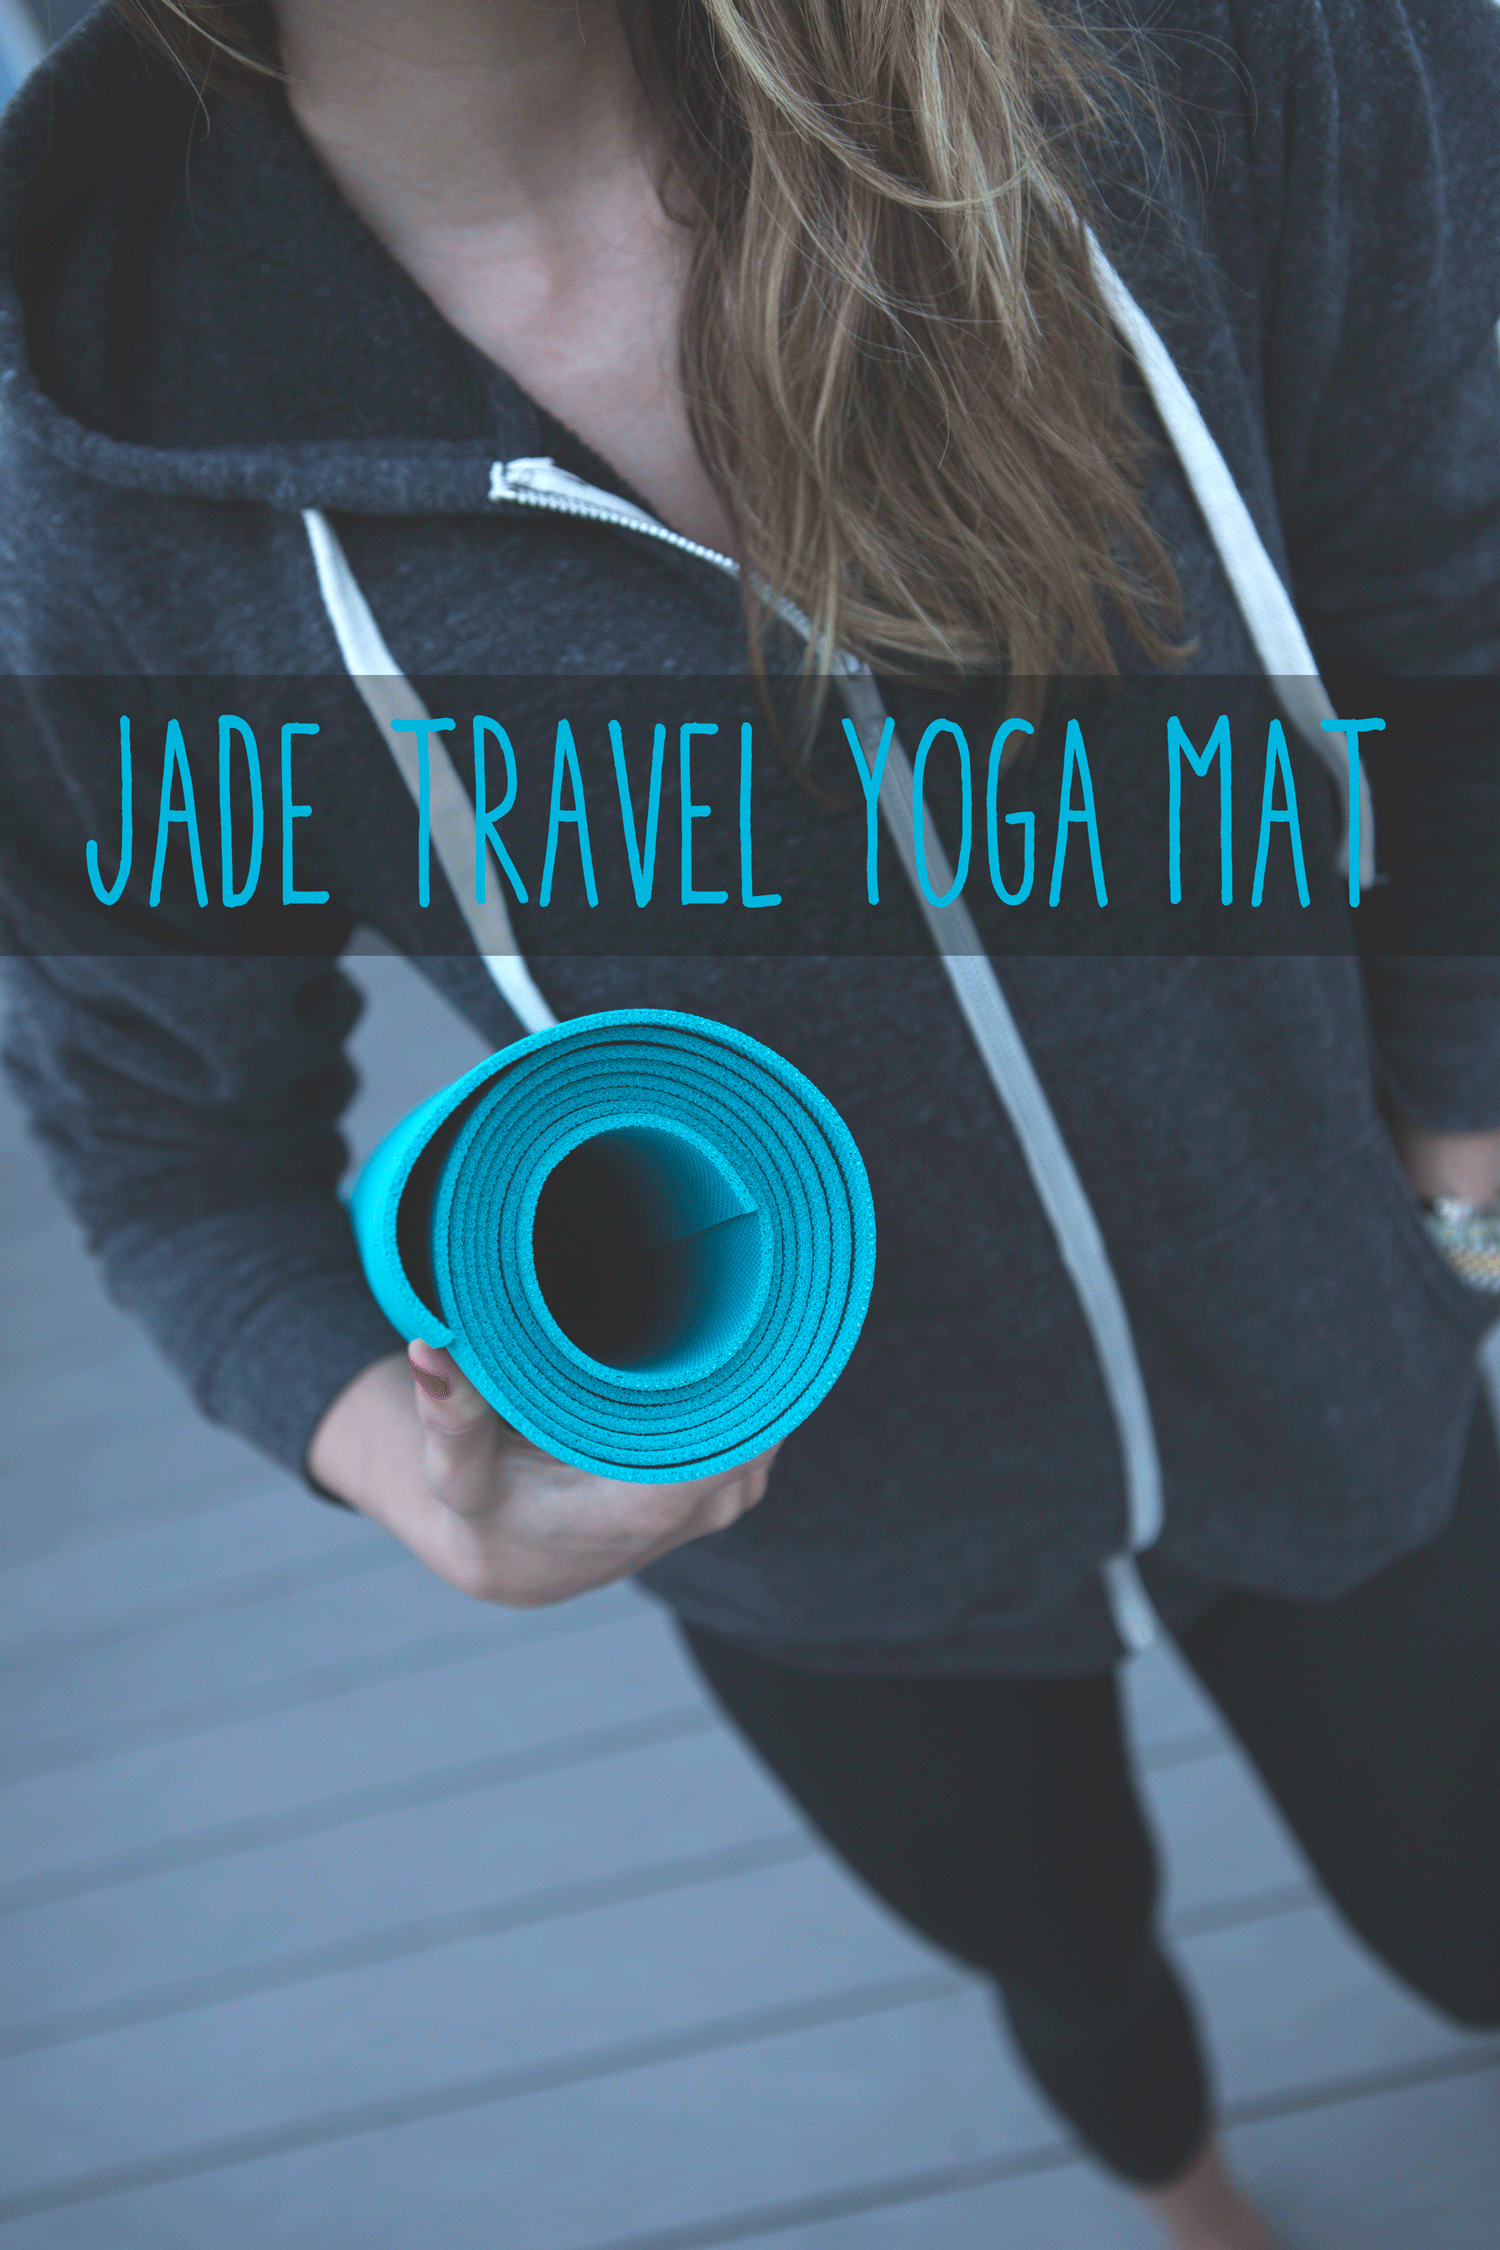 Jade Yoga Mats & Yoga Gear